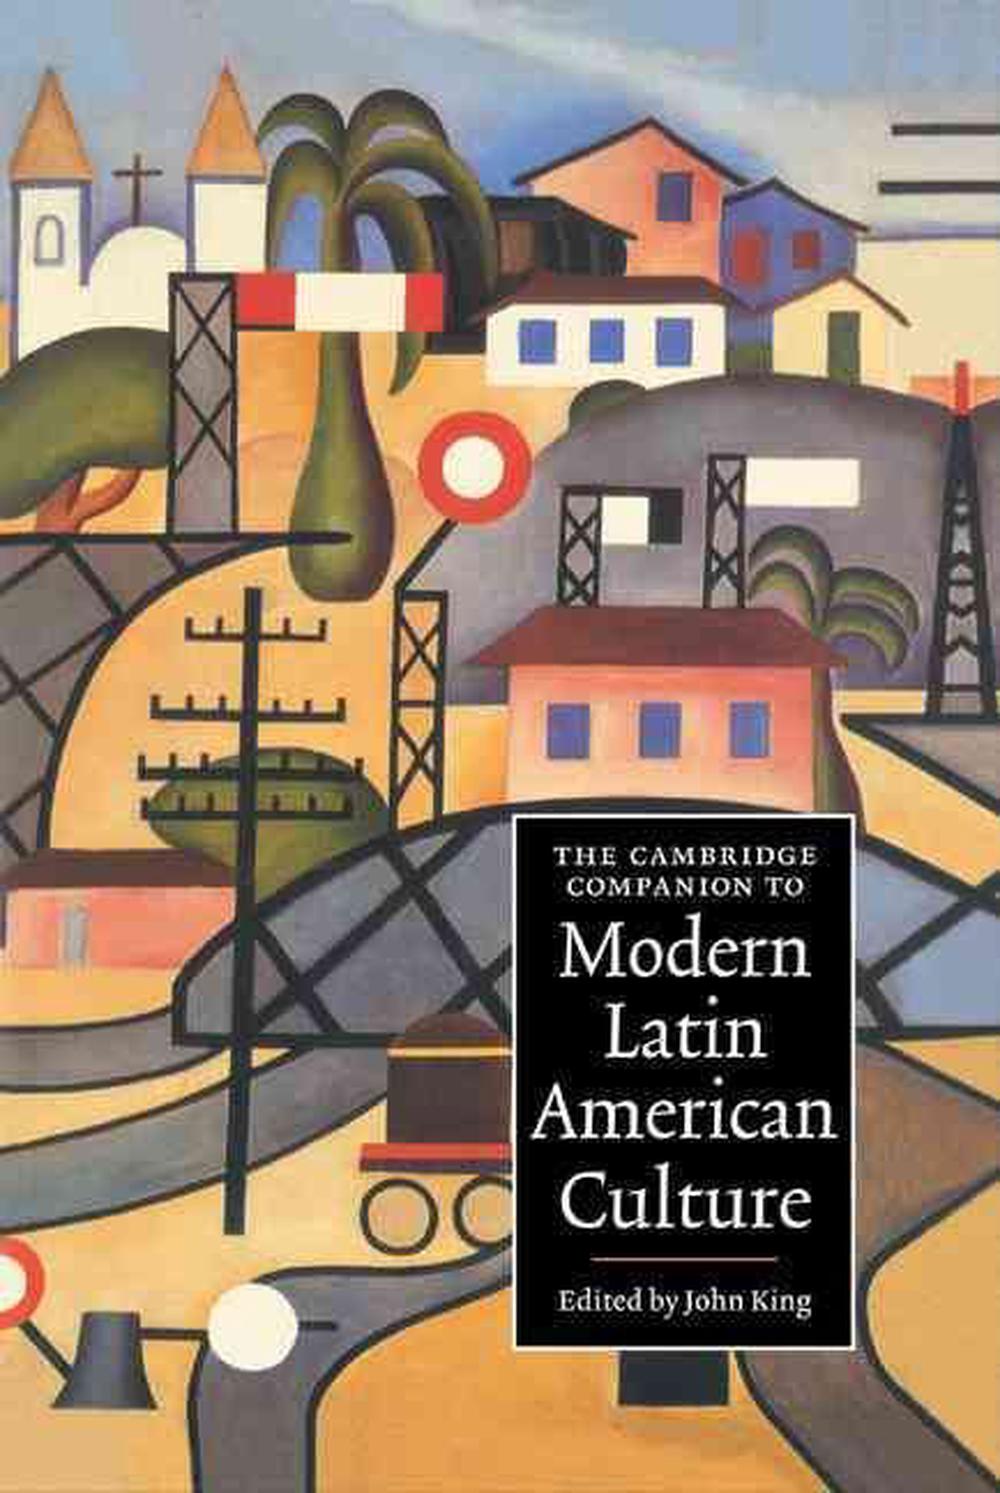 The Cambridge Companion to Modern Latin American Culture by John King